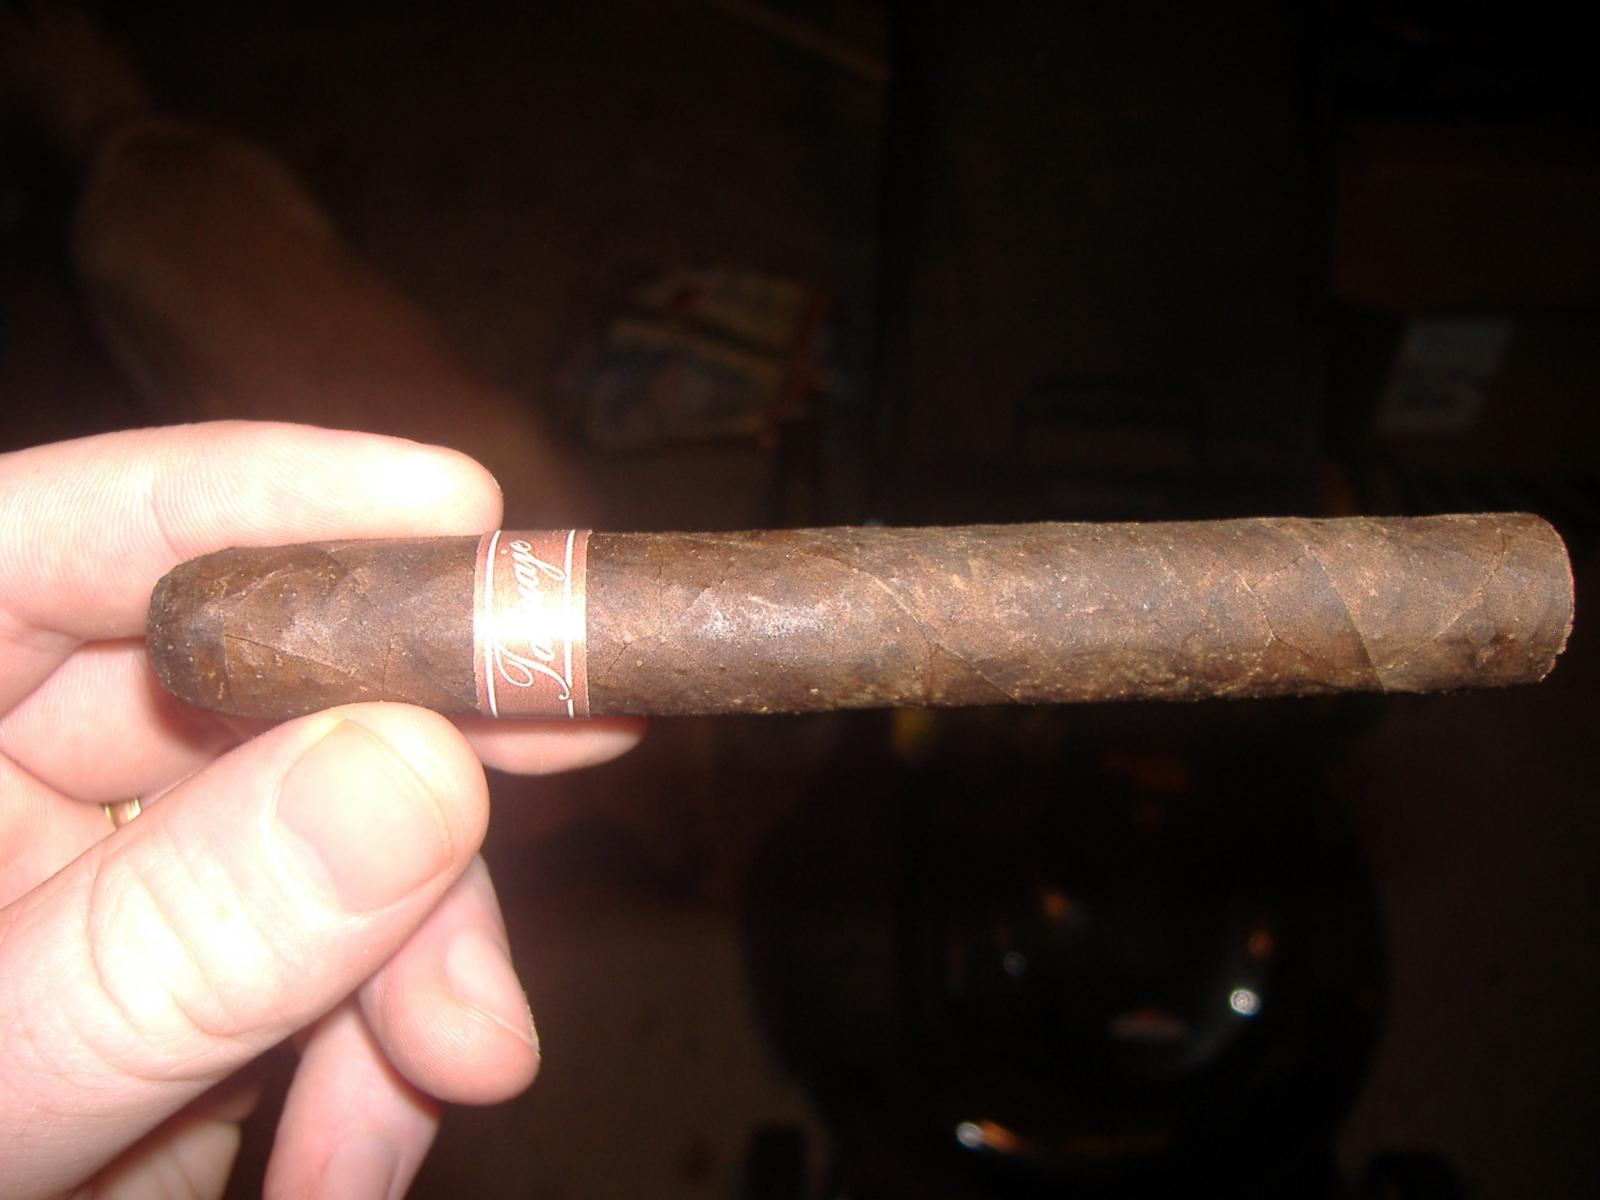 The cigar...